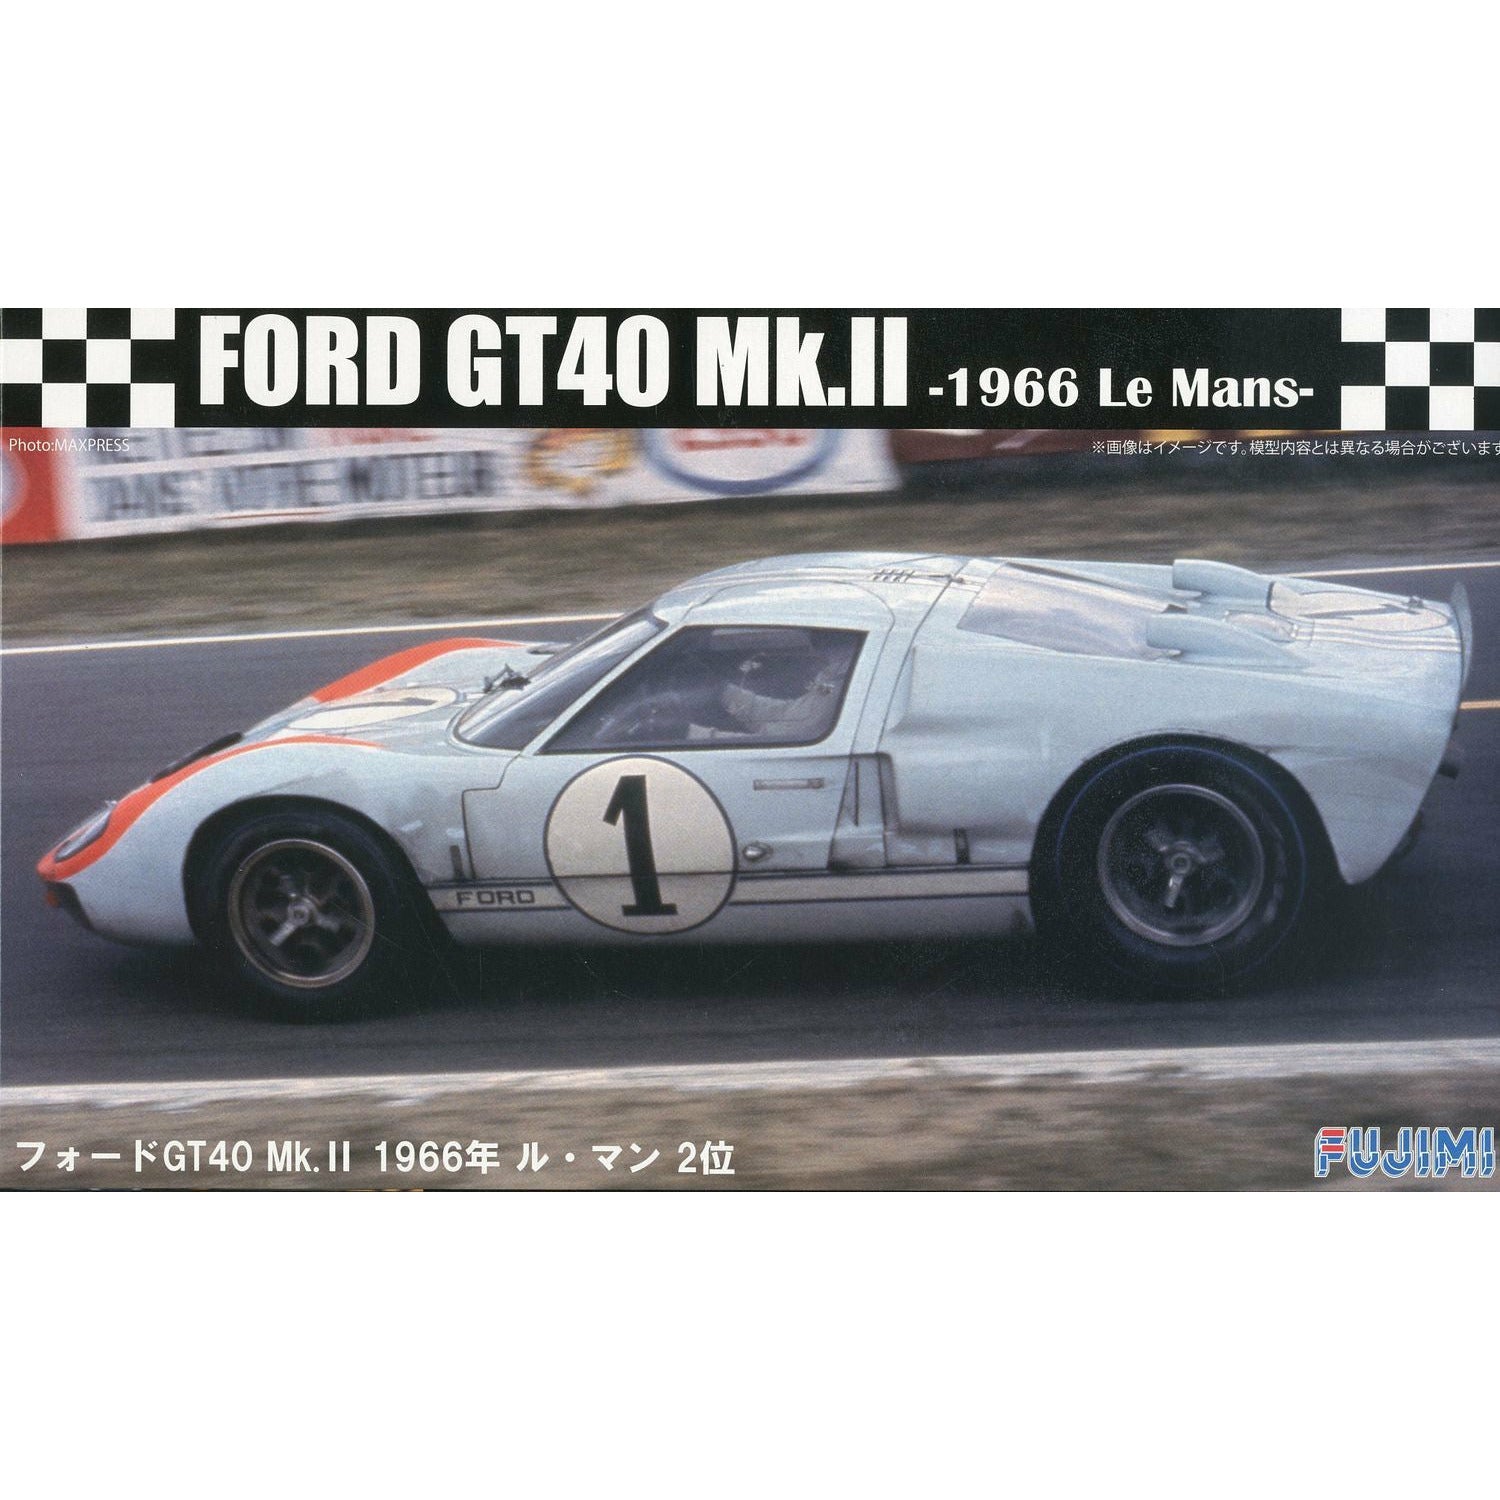 Ford GT40 Mk-II '66 LeMans 2nd 1/24 Model Car Kit #126043 by Fujimi